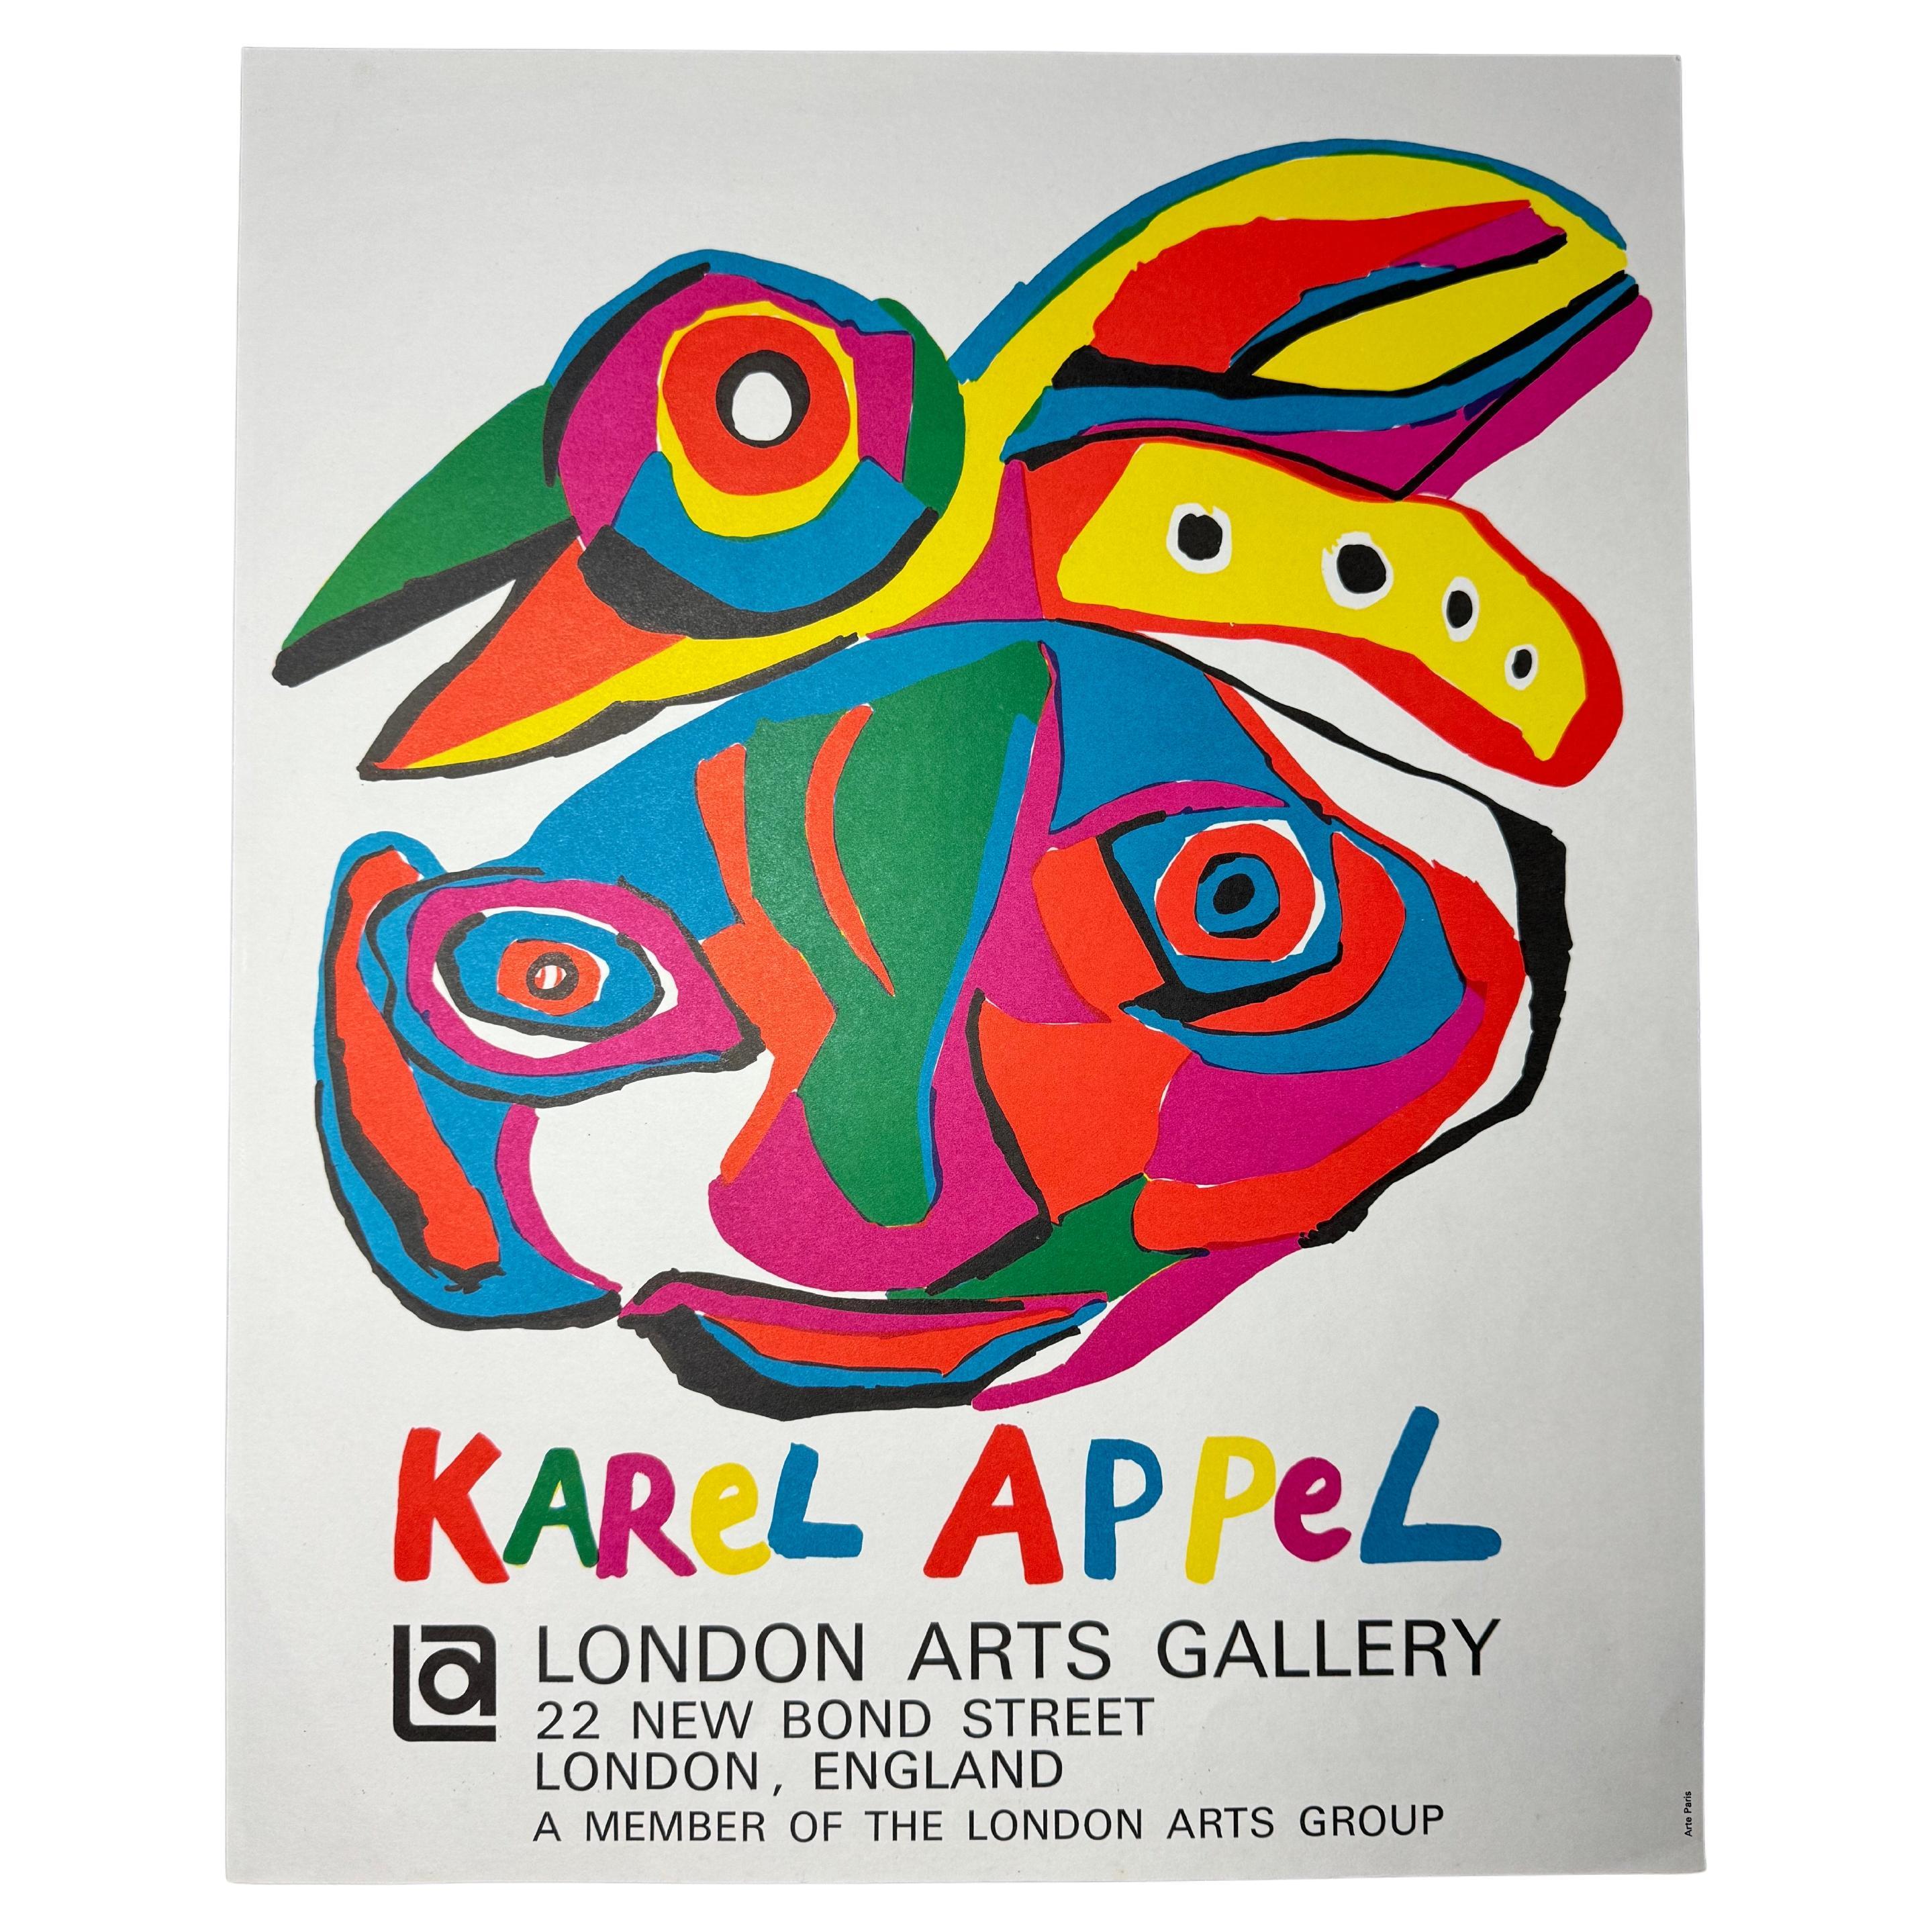 Impression d'exposition « London Arts Gallery » vintage Karel Appel  en vente